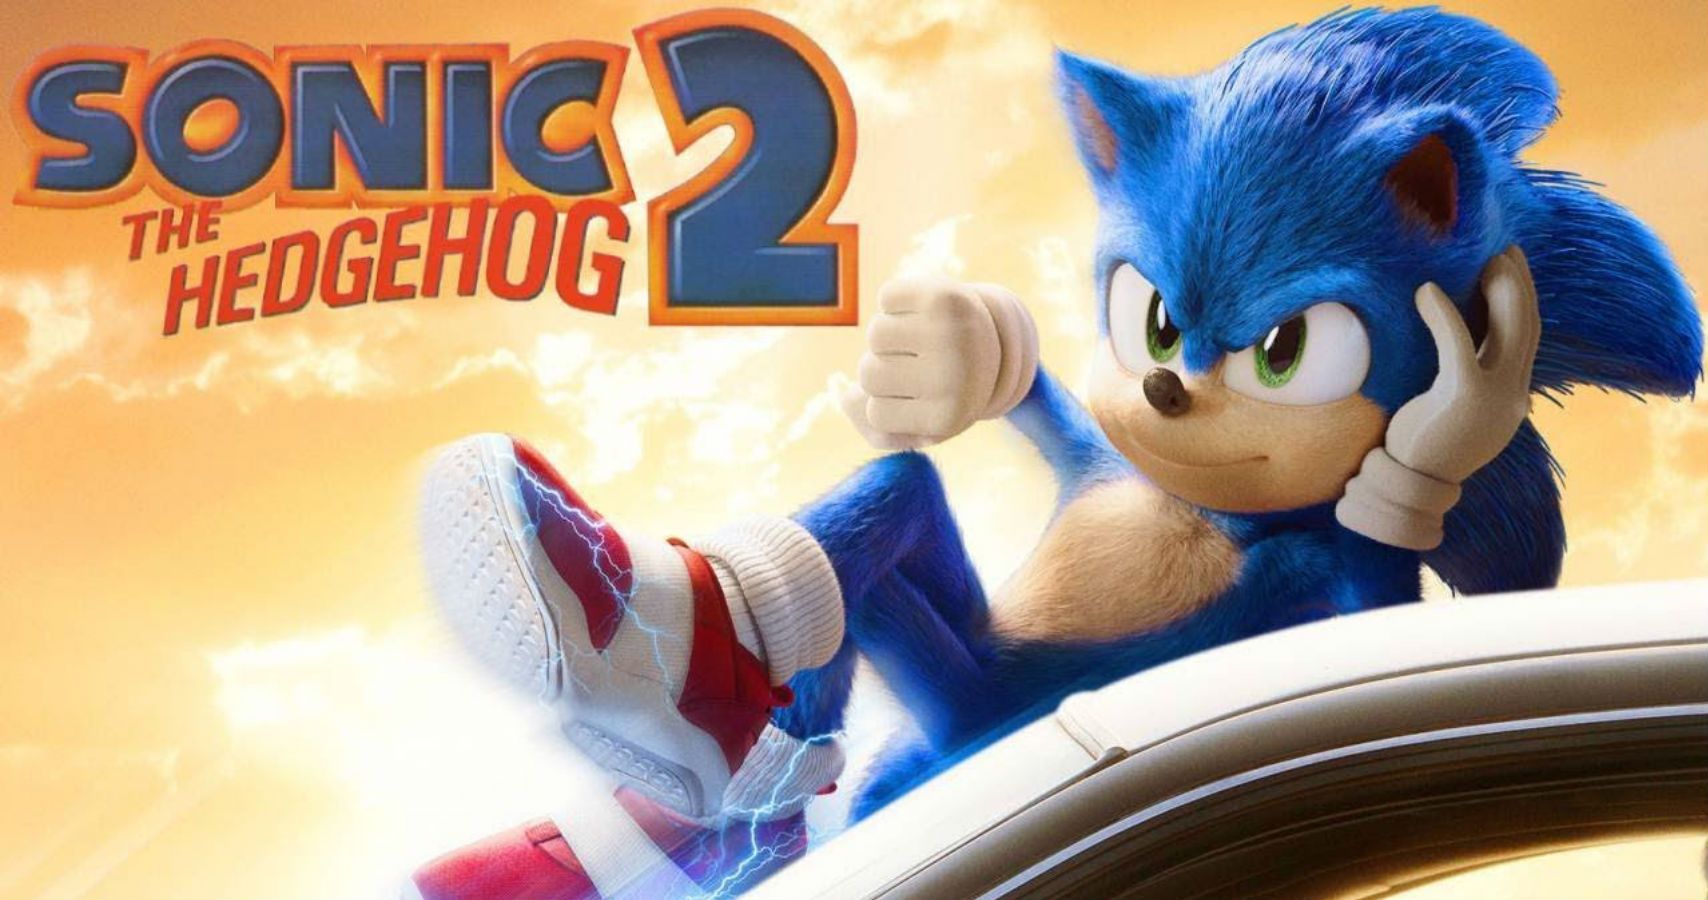 Sonic the hedgehog 2 movie